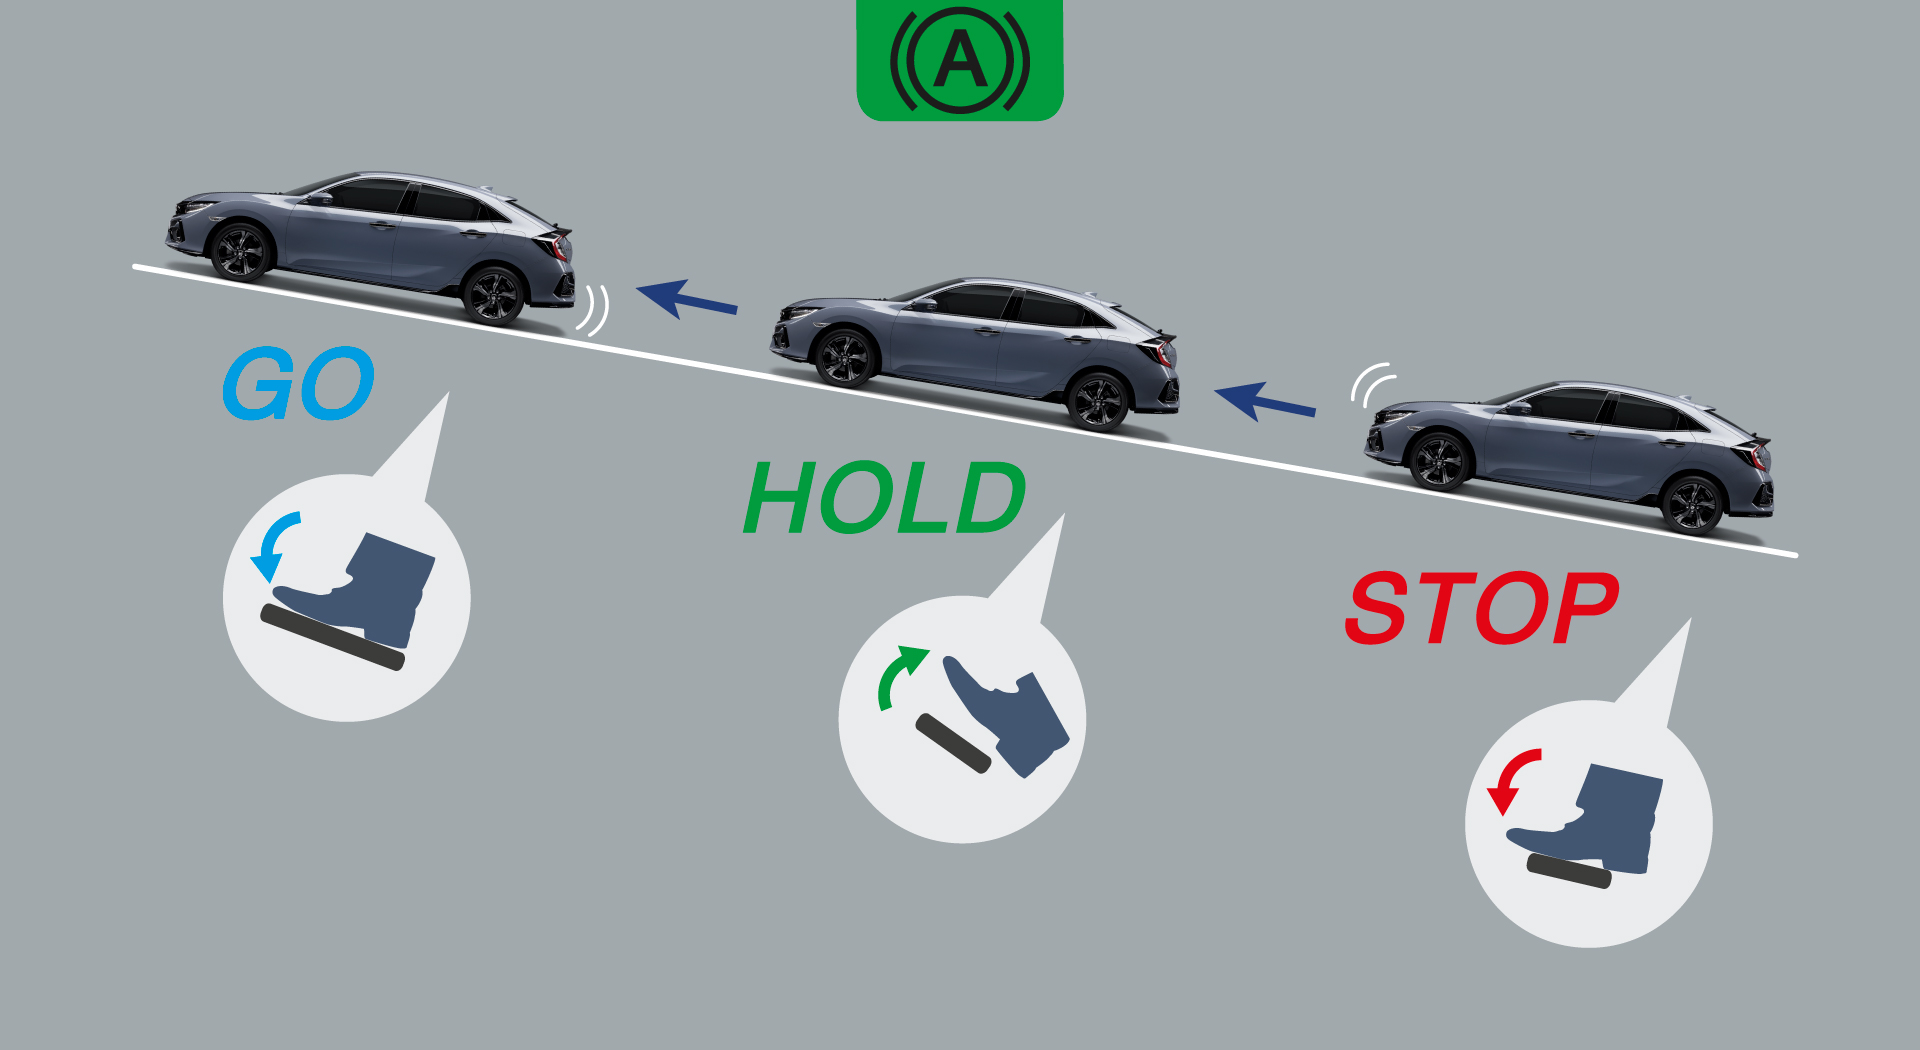 Auto Brake Hold ระบบ Brake Hold อัตโนมัติ เมื่อกดปุ่มเปิดให้ระบบทำงาน ระบบจะทำการหน่วงเบรกต่อโดยอัตโนมัติหลังจากเหยียบเบรกให้รถหยุดนิ่ง เพื่อป้องกันไม่ให้รถเคลื่อนตัวโดยไม่จำเป็นต้องเหยียบเบรกค้างไว้ และระบบจะคลายเบรกโดยอัตโนมัติเมื่อเหยียบคันเร่ง